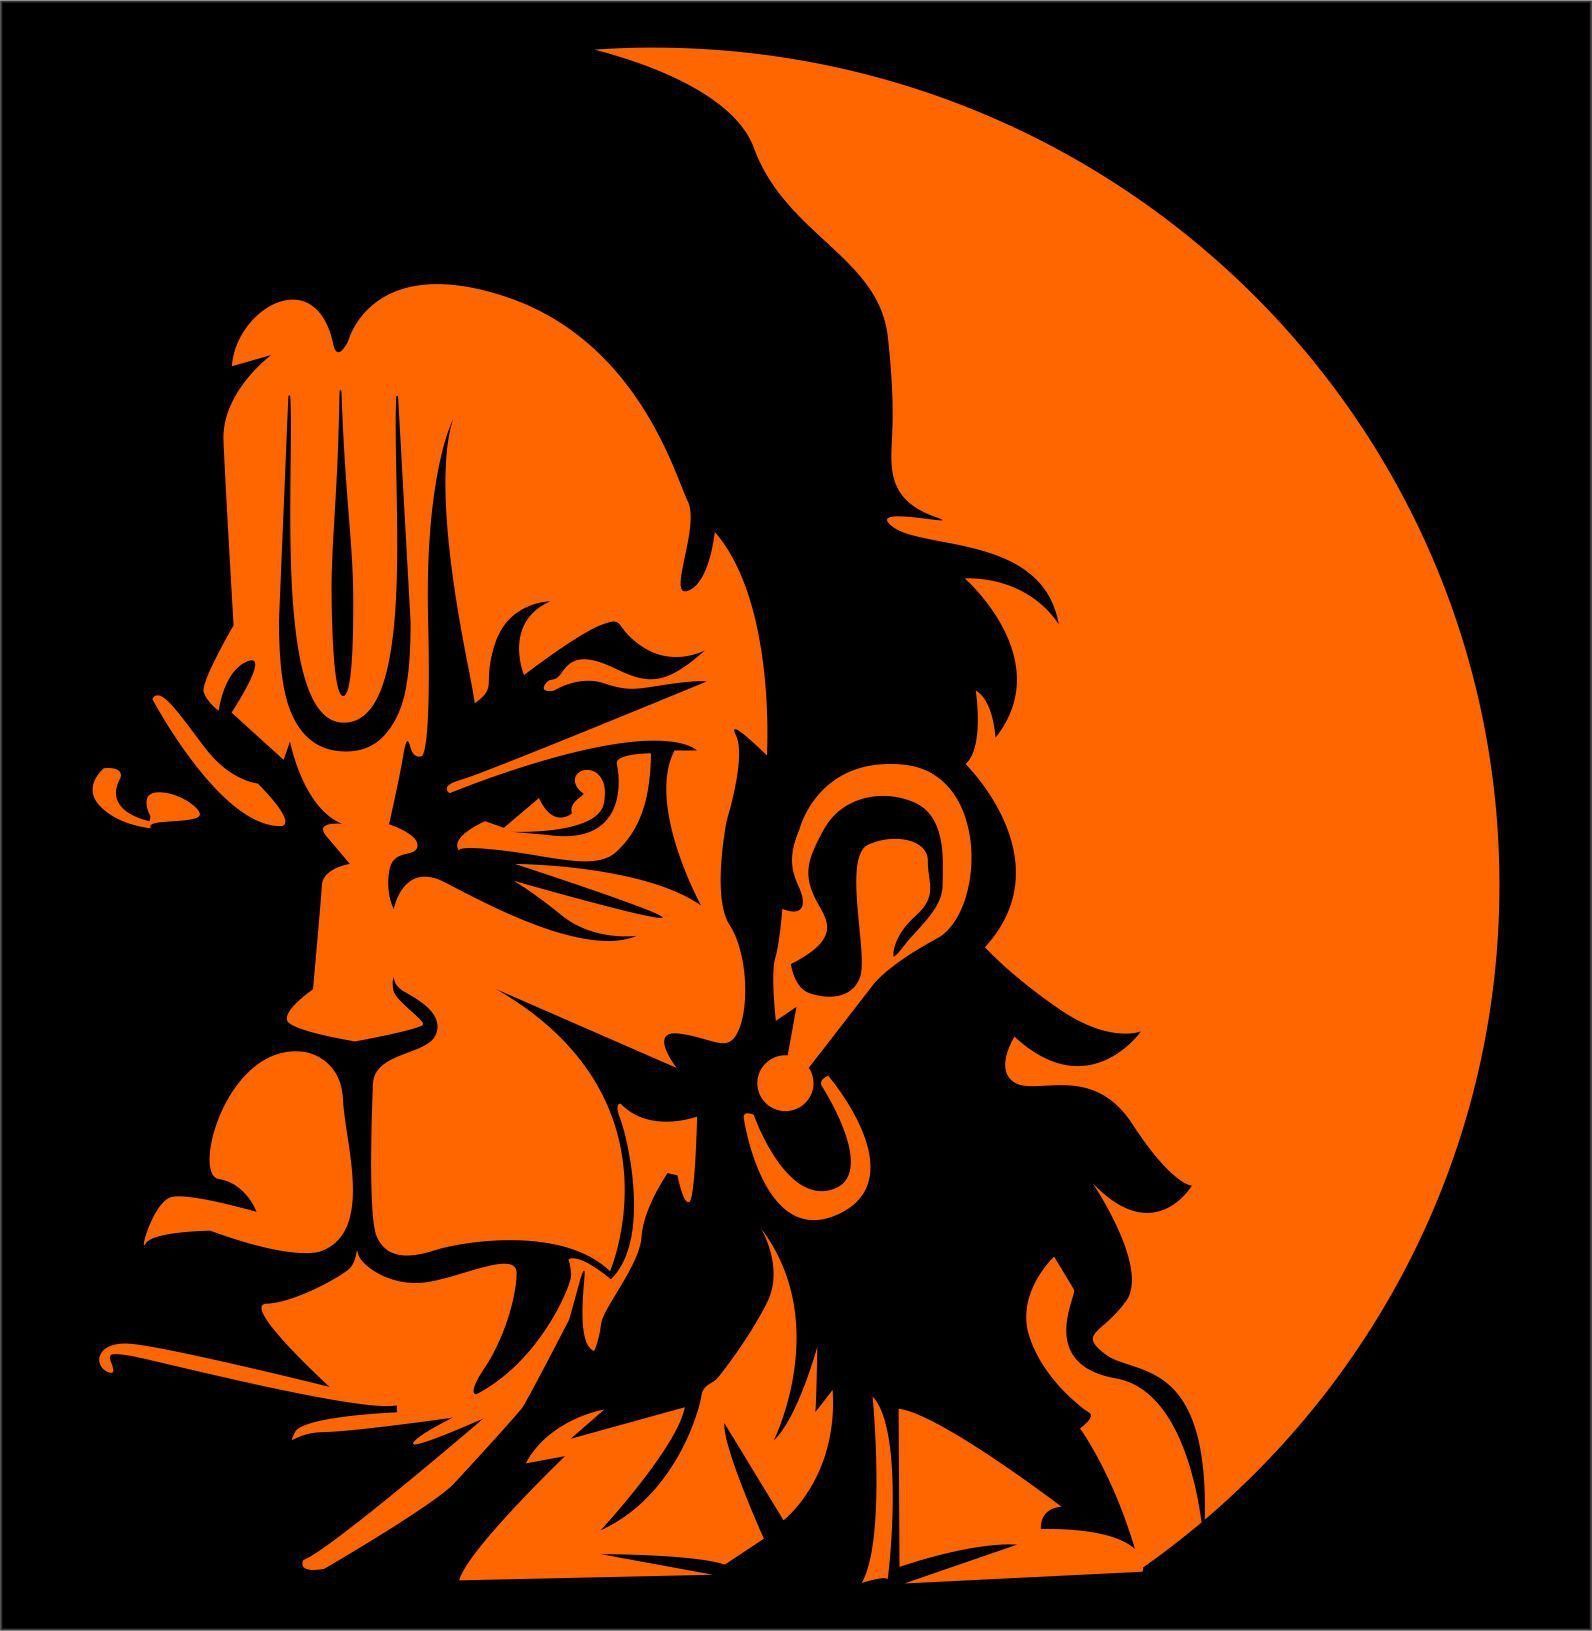 IDesign Hanuman Face 5inch Windows Car Sticker Price in India August, 2020 IndiaShopps. Hanuman HD wallpaper, Hanuman wallpaper, Lord hanuman wallpaper